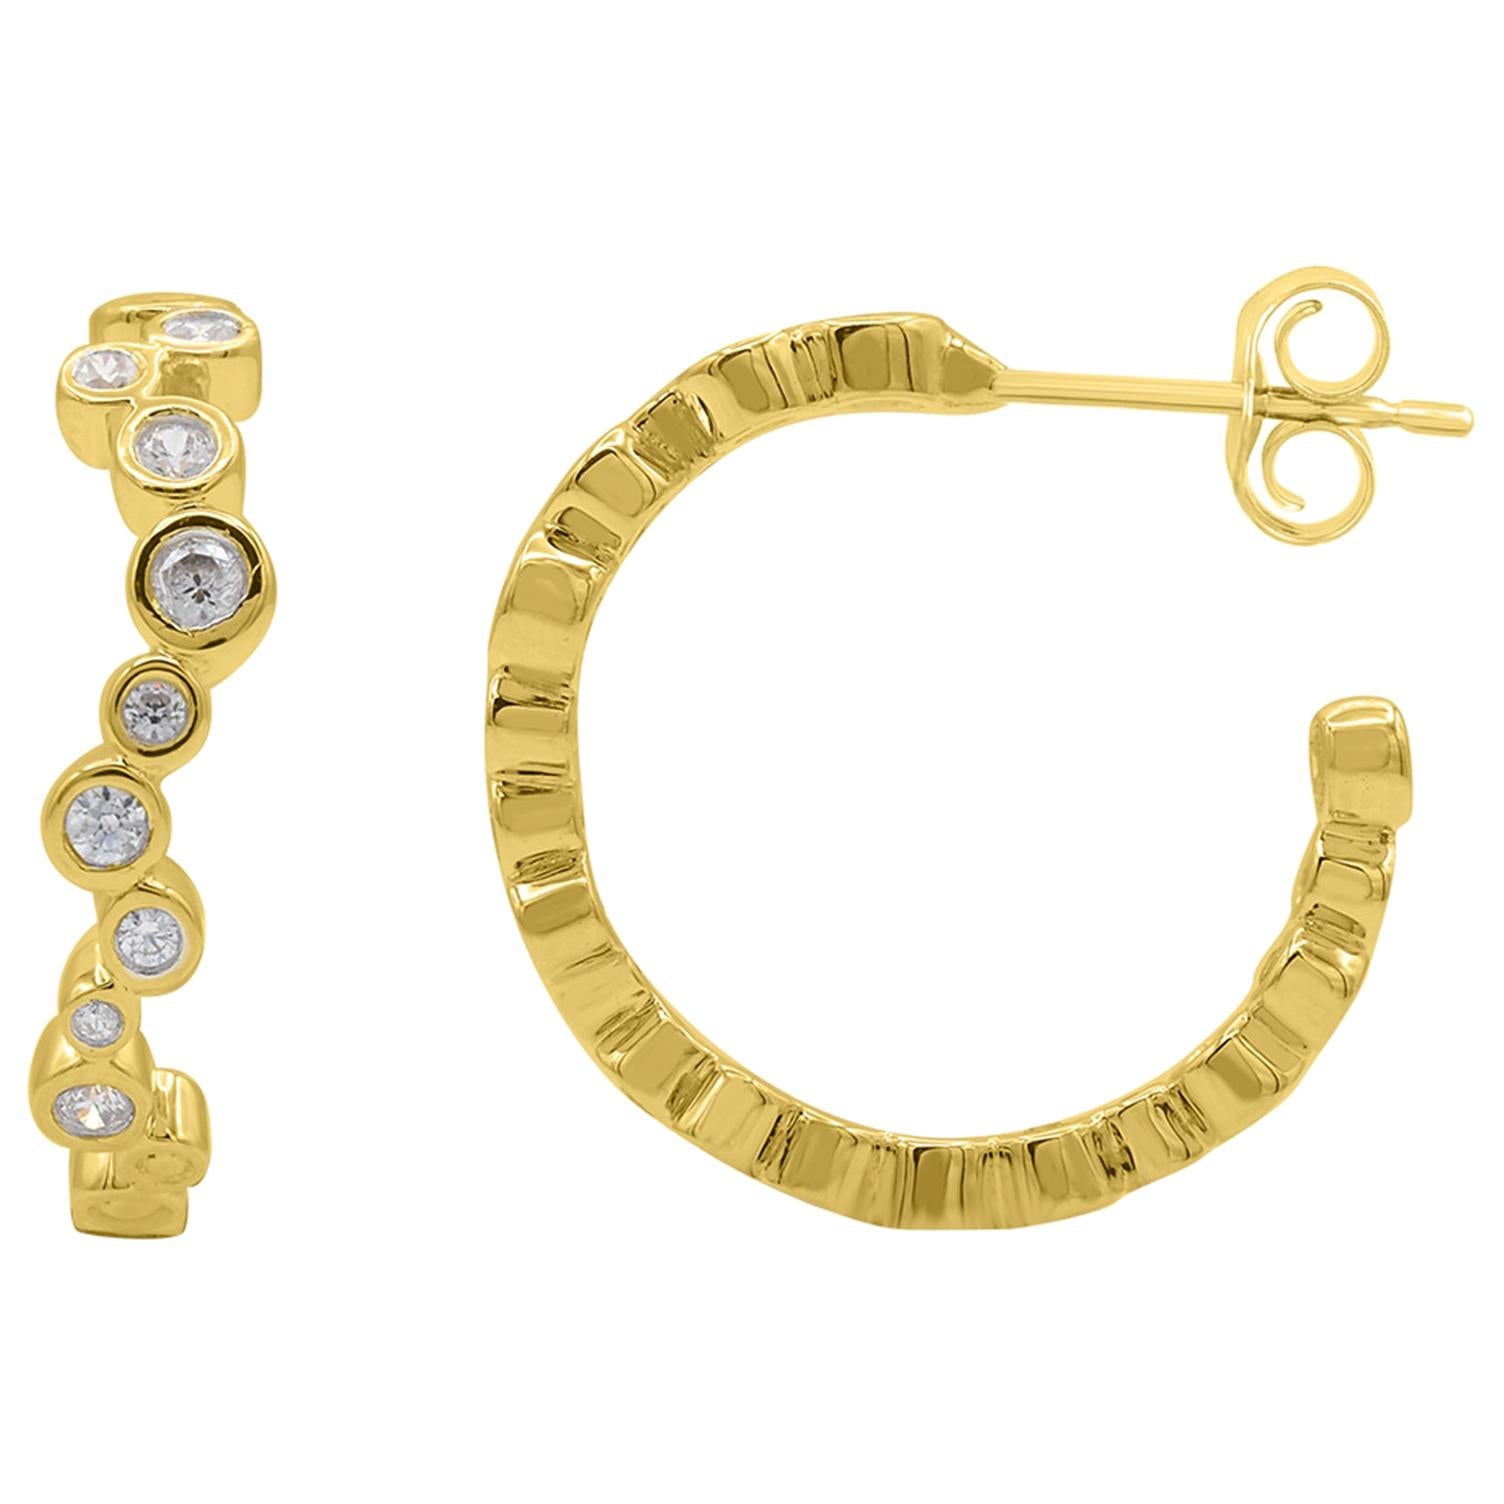 Details more than 74 3 carat diamond hoop earrings latest - esthdonghoadian